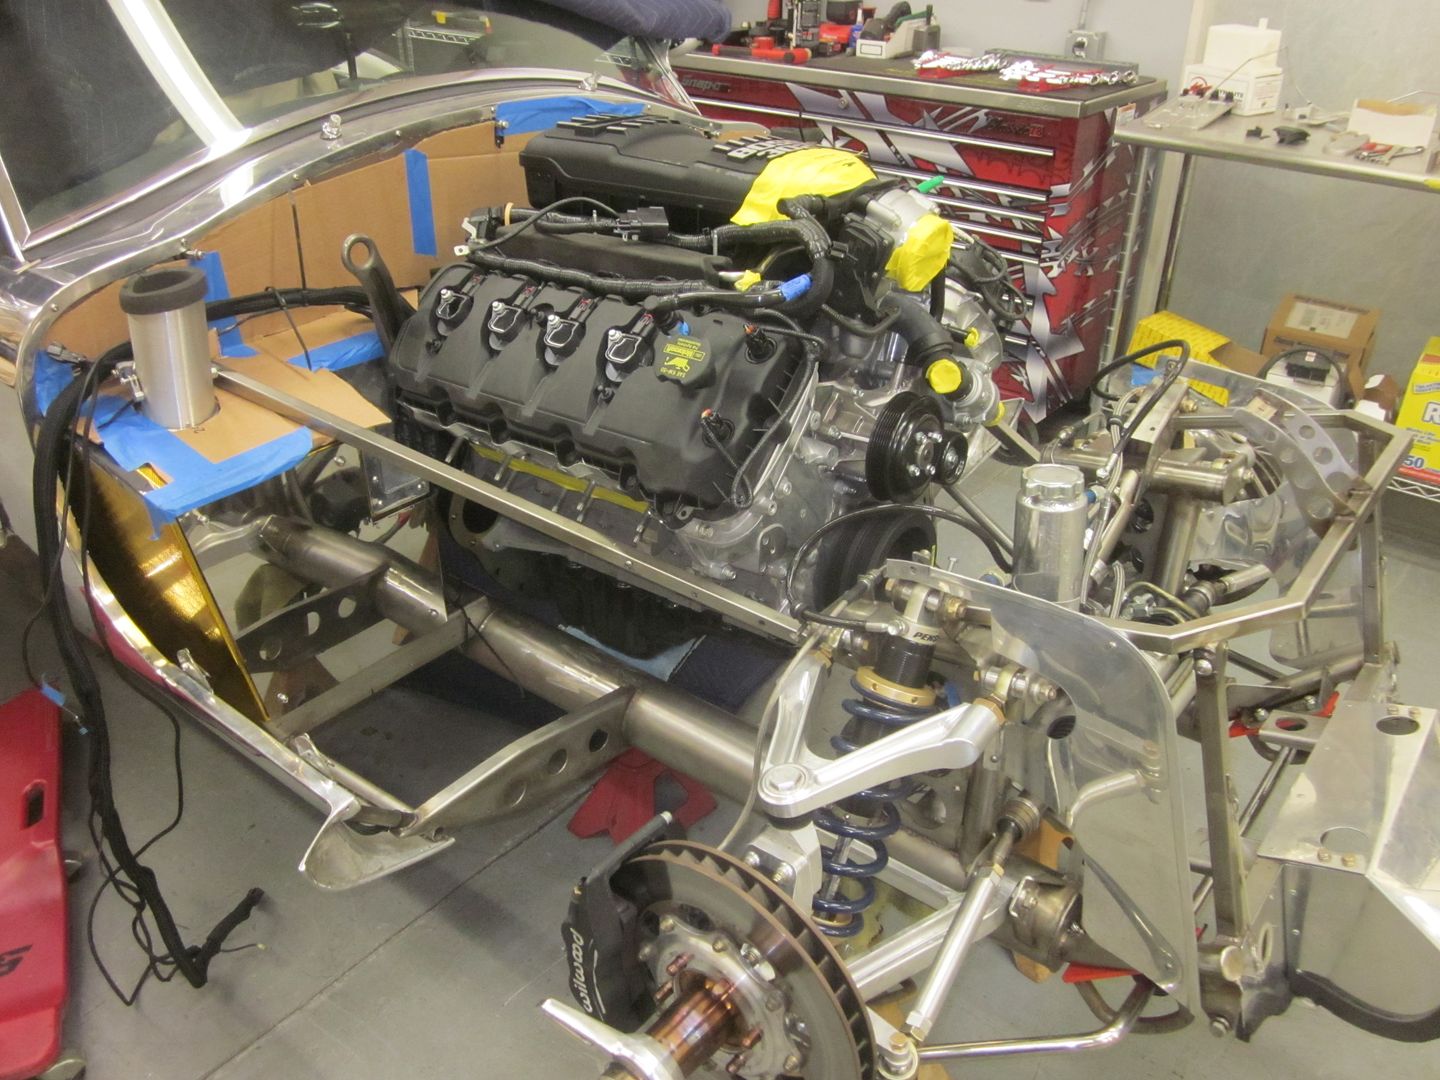 2013 Boss 302 Coyote engine in Cobra